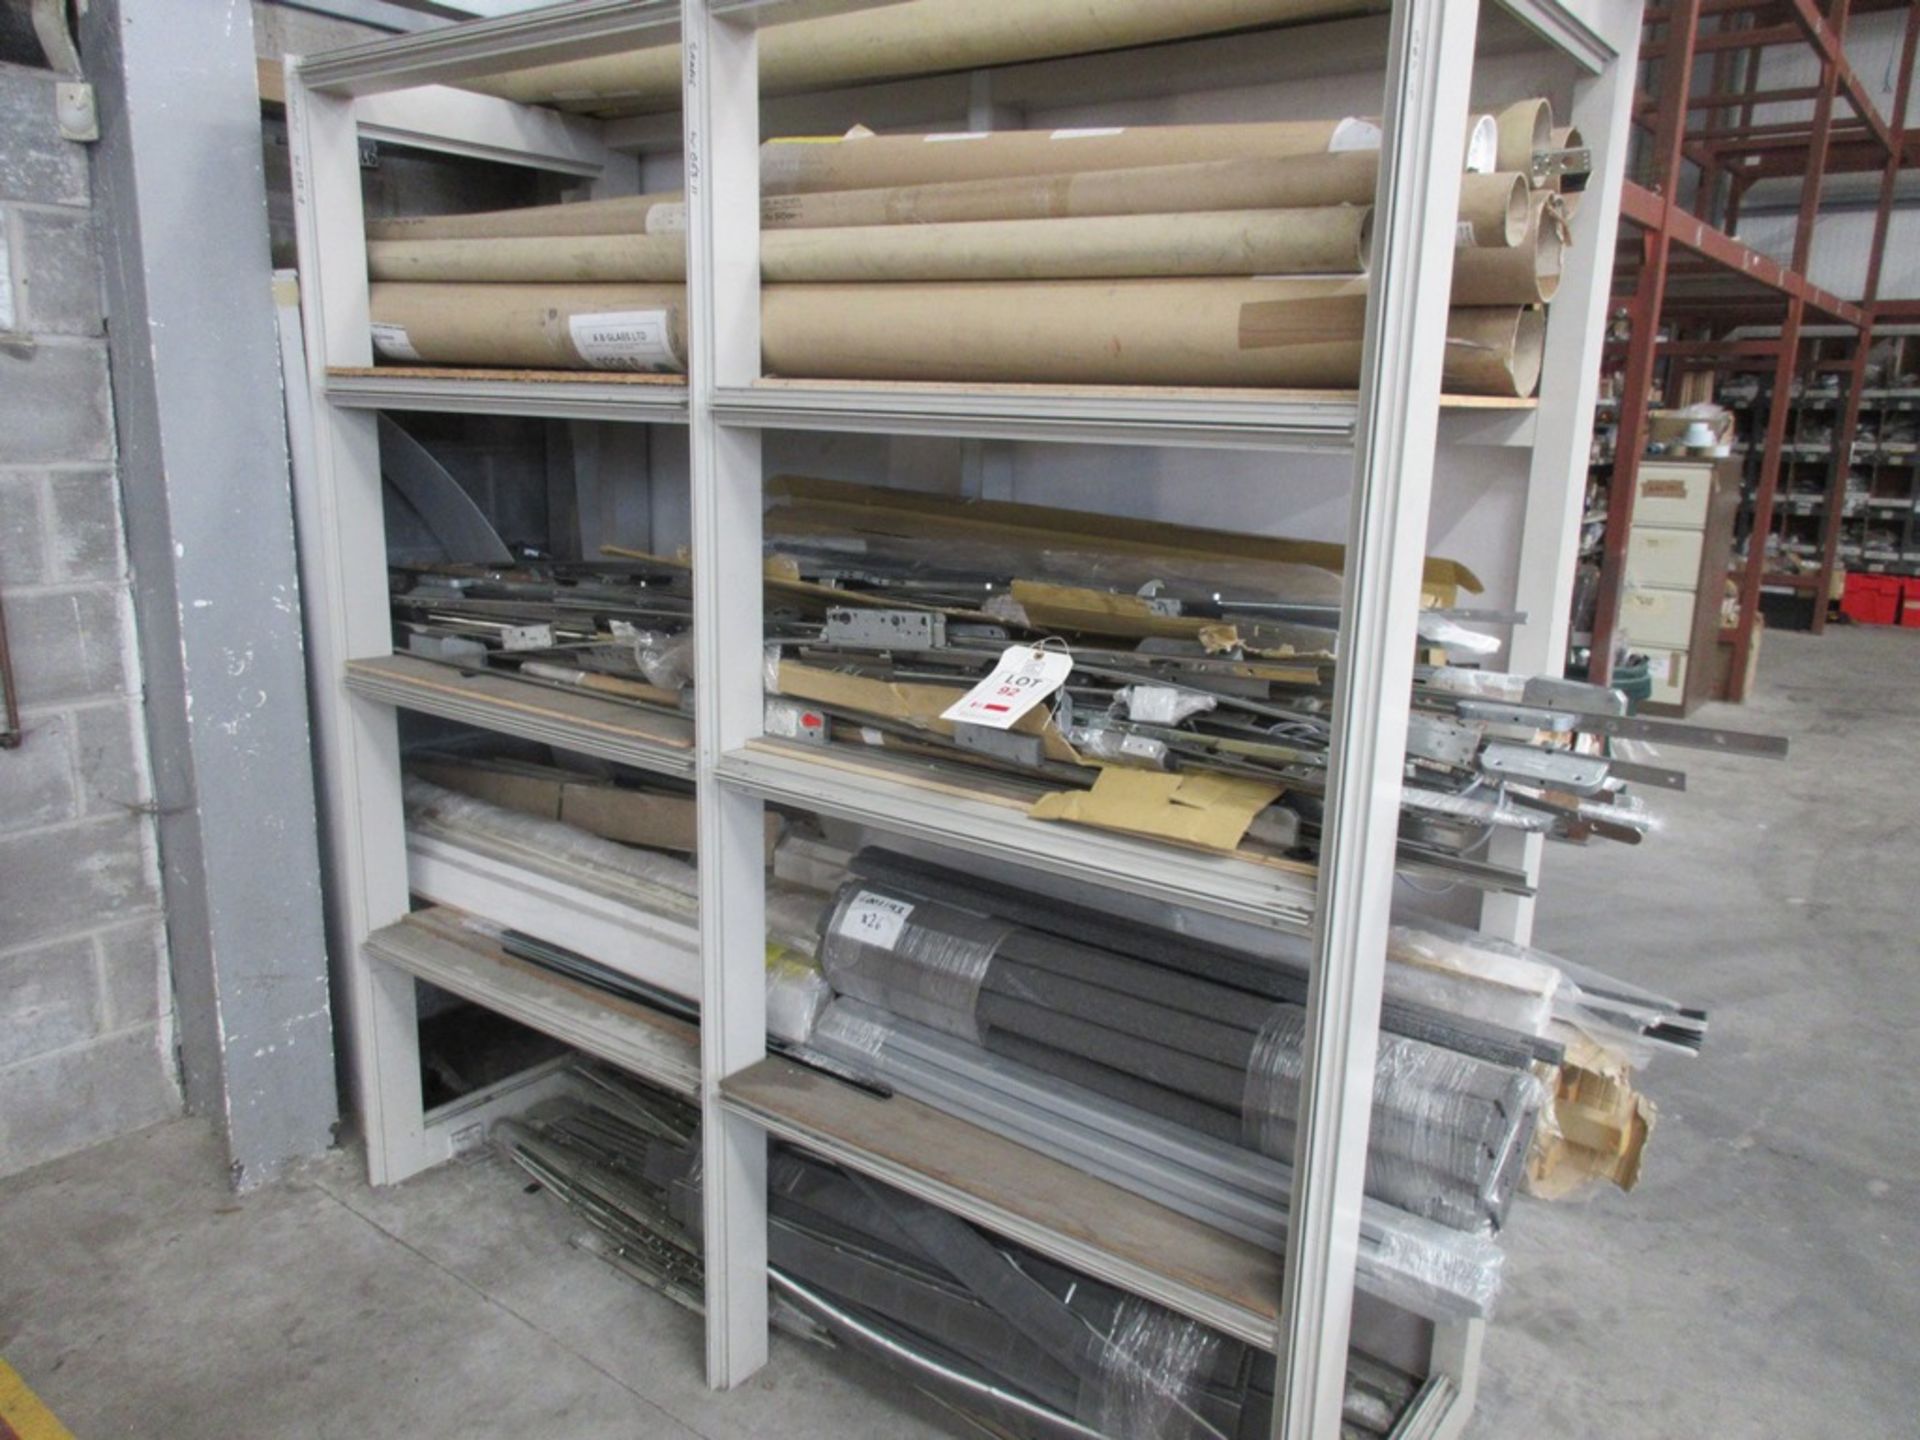 Quantity of assorted steel rods, window fittings, foam strips etc.